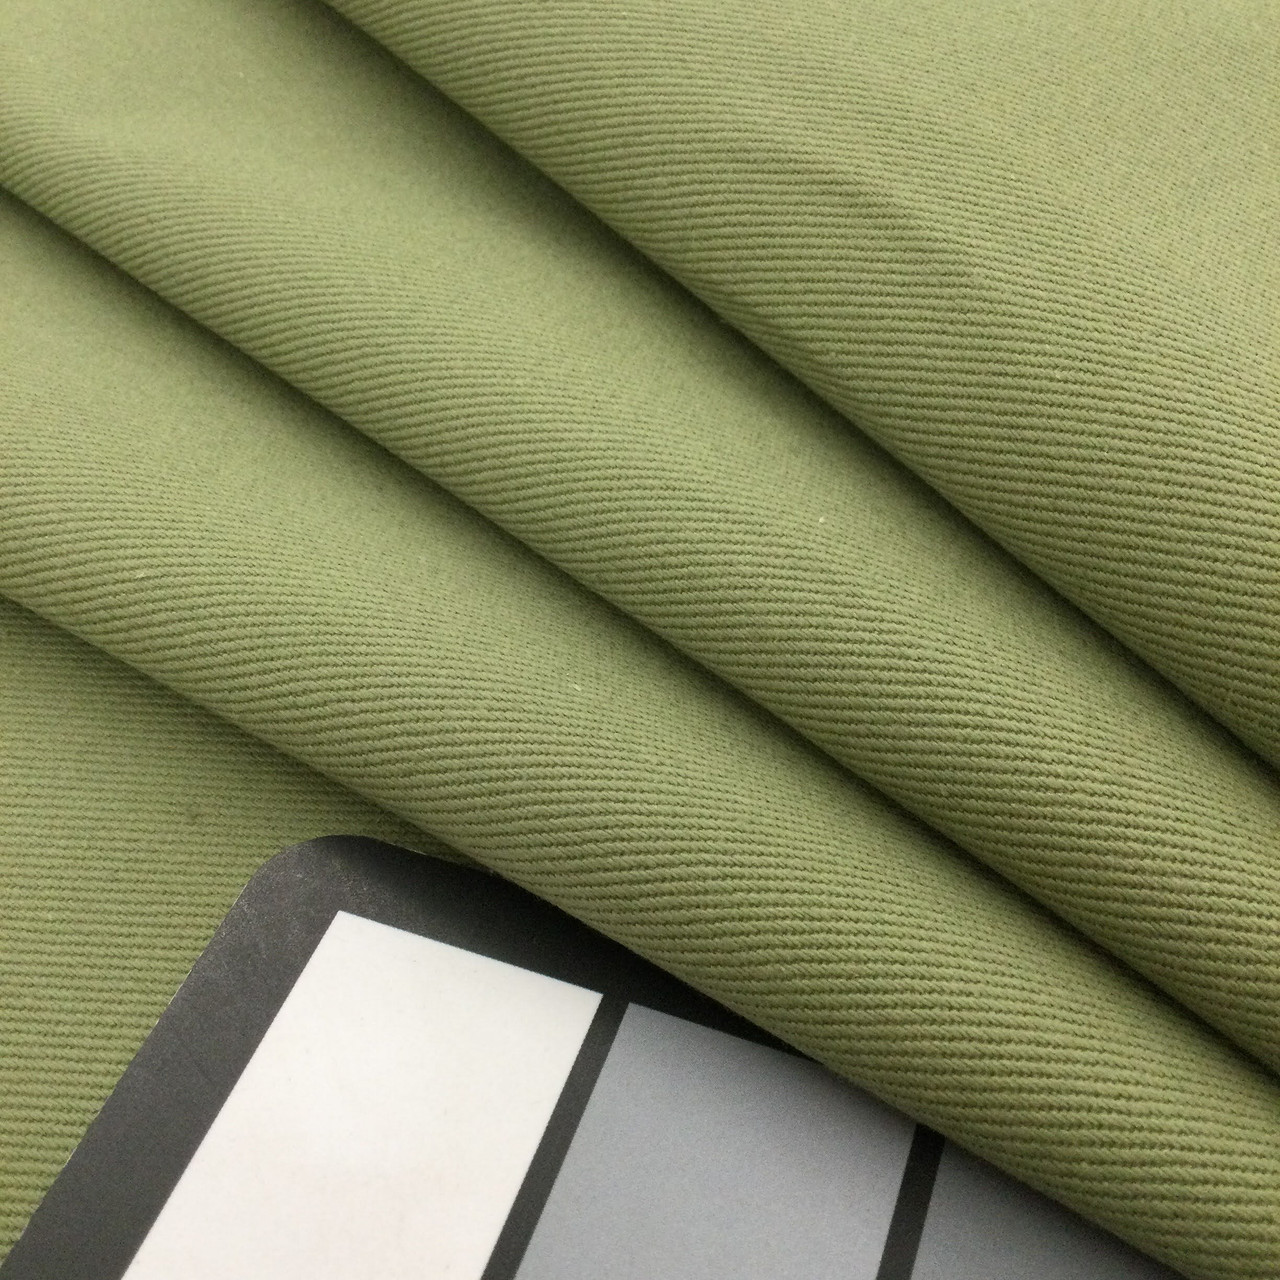 Dark Moss, Cotton Twill Fabric, 8 oz., Apparel / Slipcovers / Bedding, 54 Wide